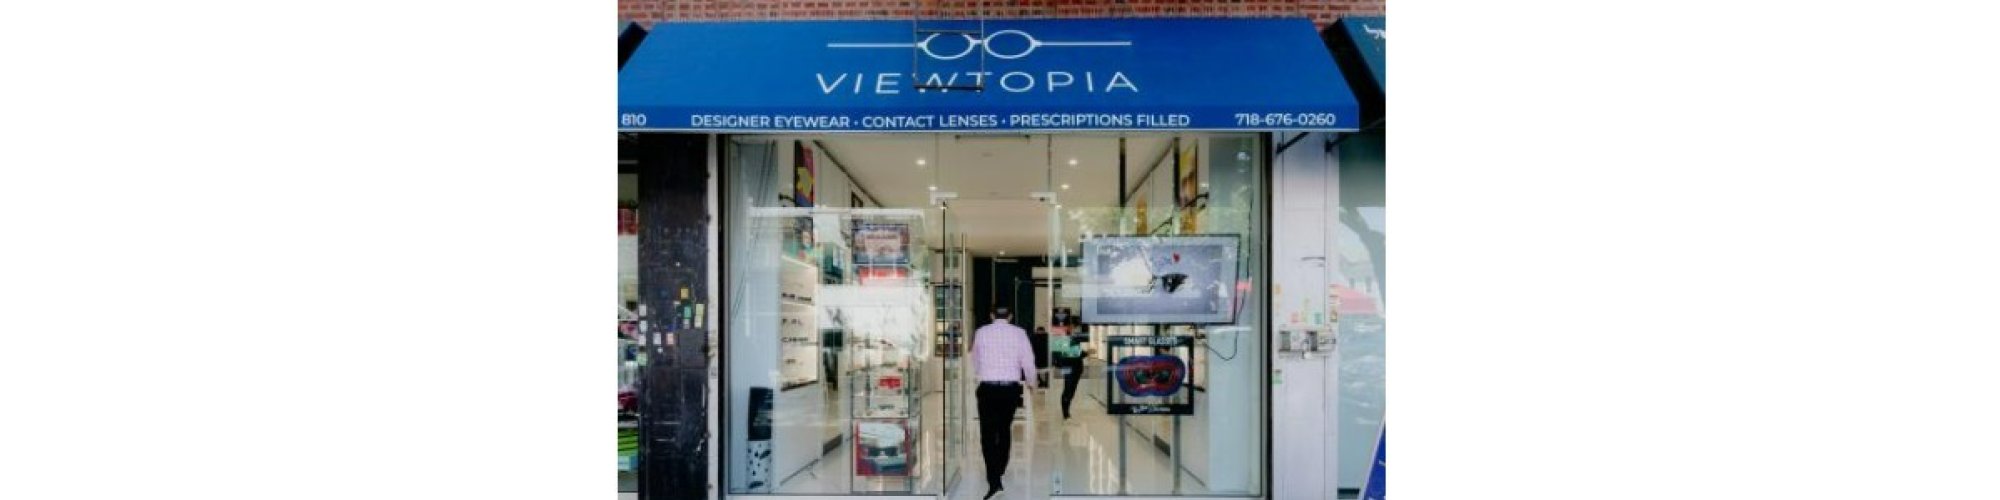 Viewtopia Optical - Prescription Glasses, Sunglasses & Contact Lenses